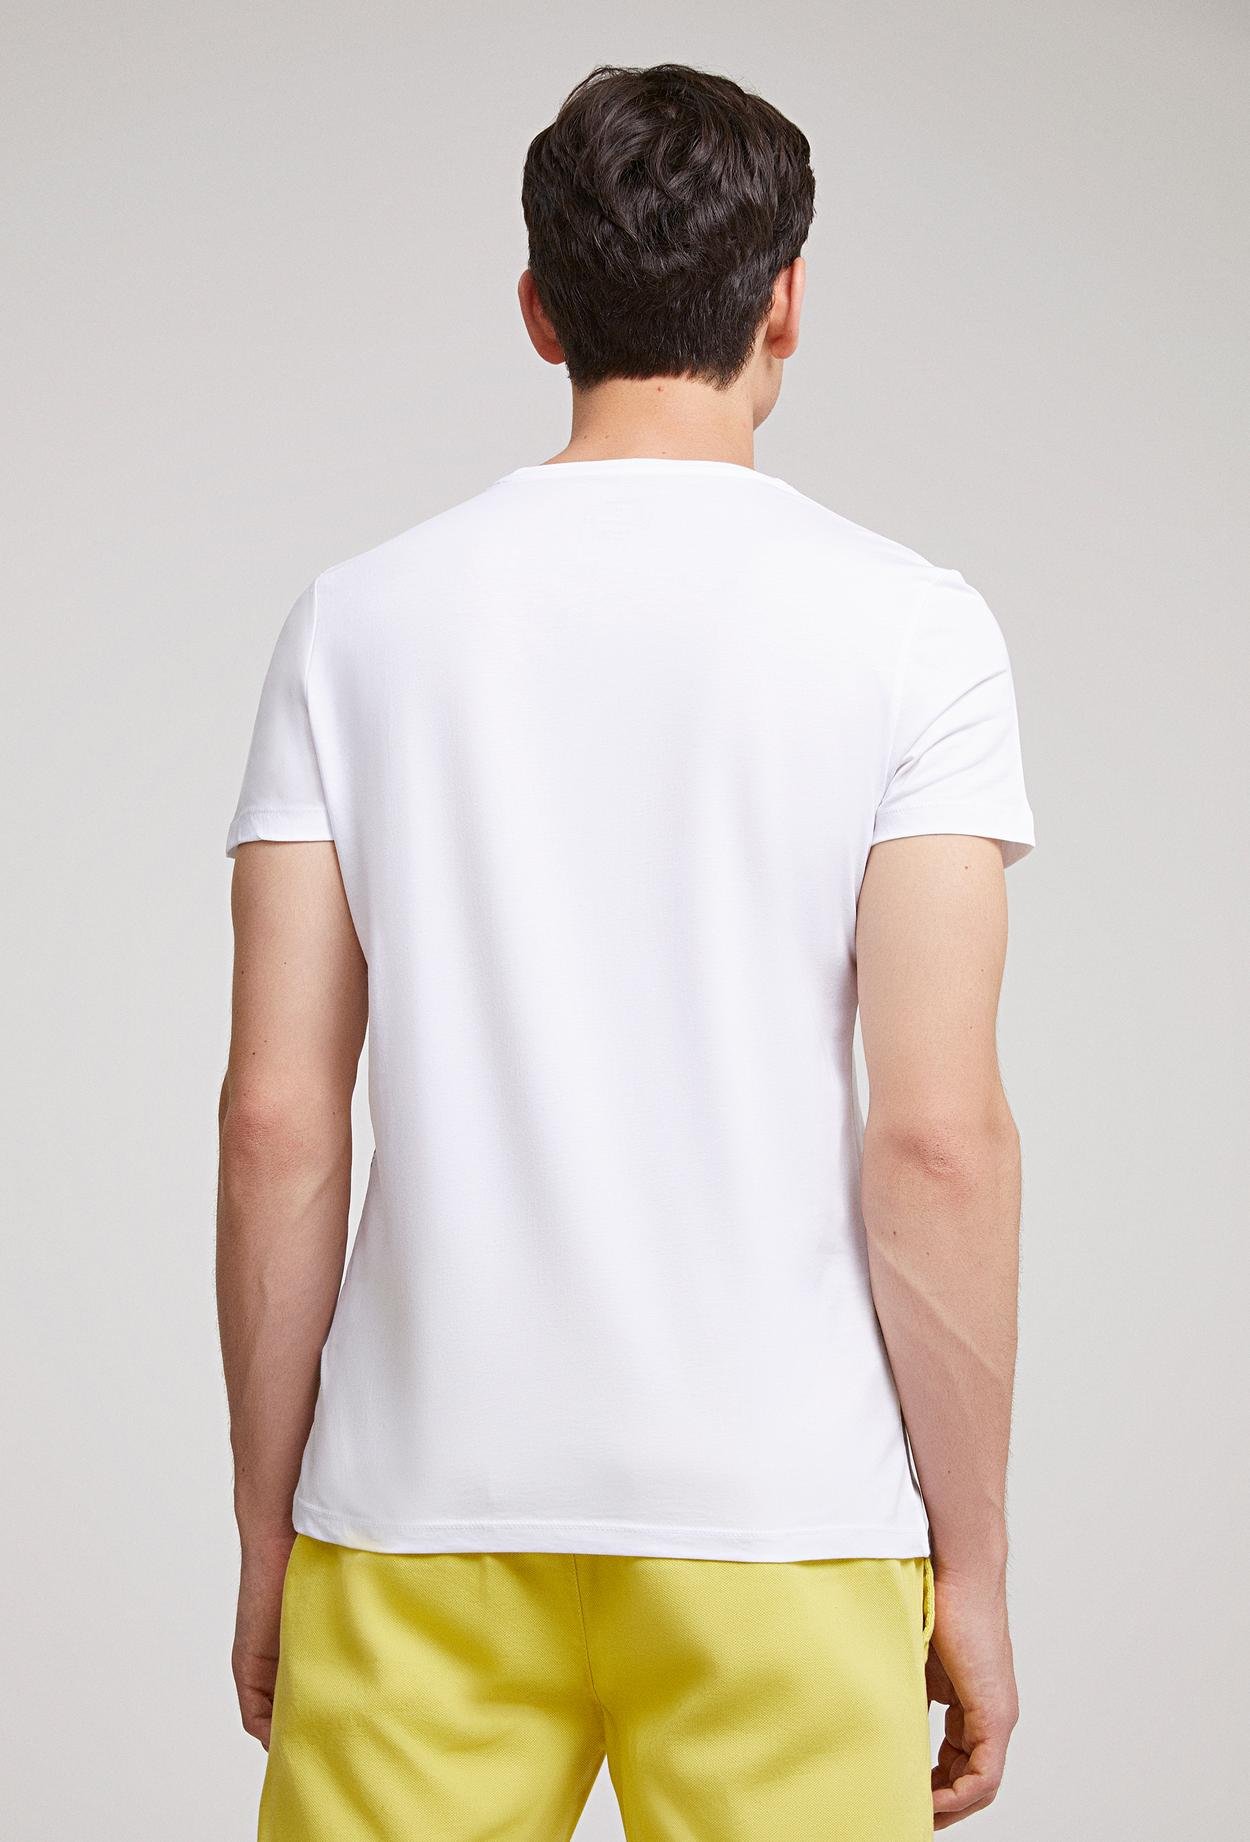 Twn Slim Fit Beyaz Nakışlı T-Shirt